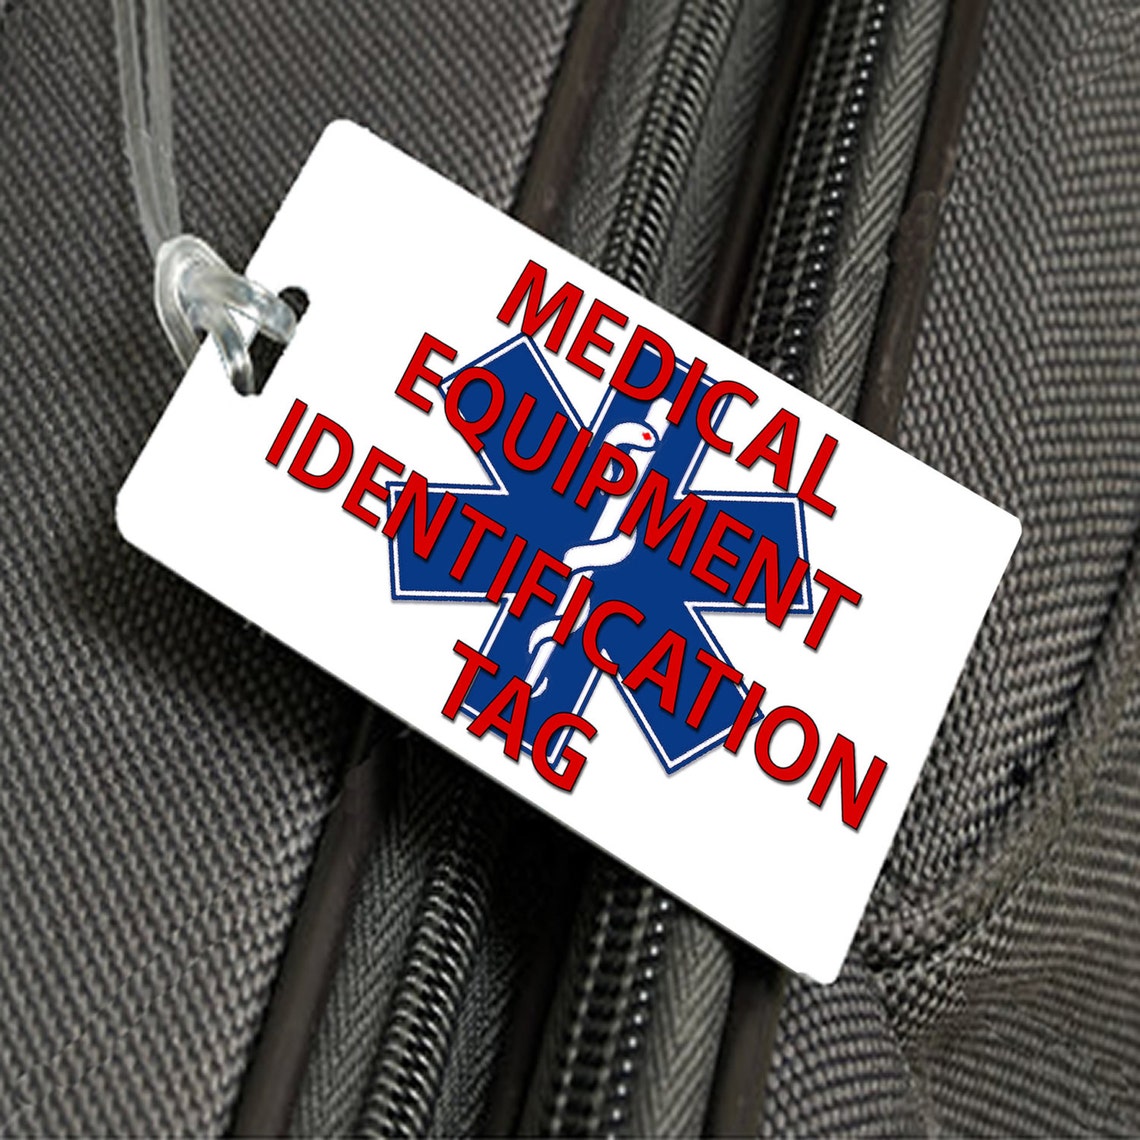 2x-medical-equipment-identification-luggage-tags-tsa-carry-on-etsy